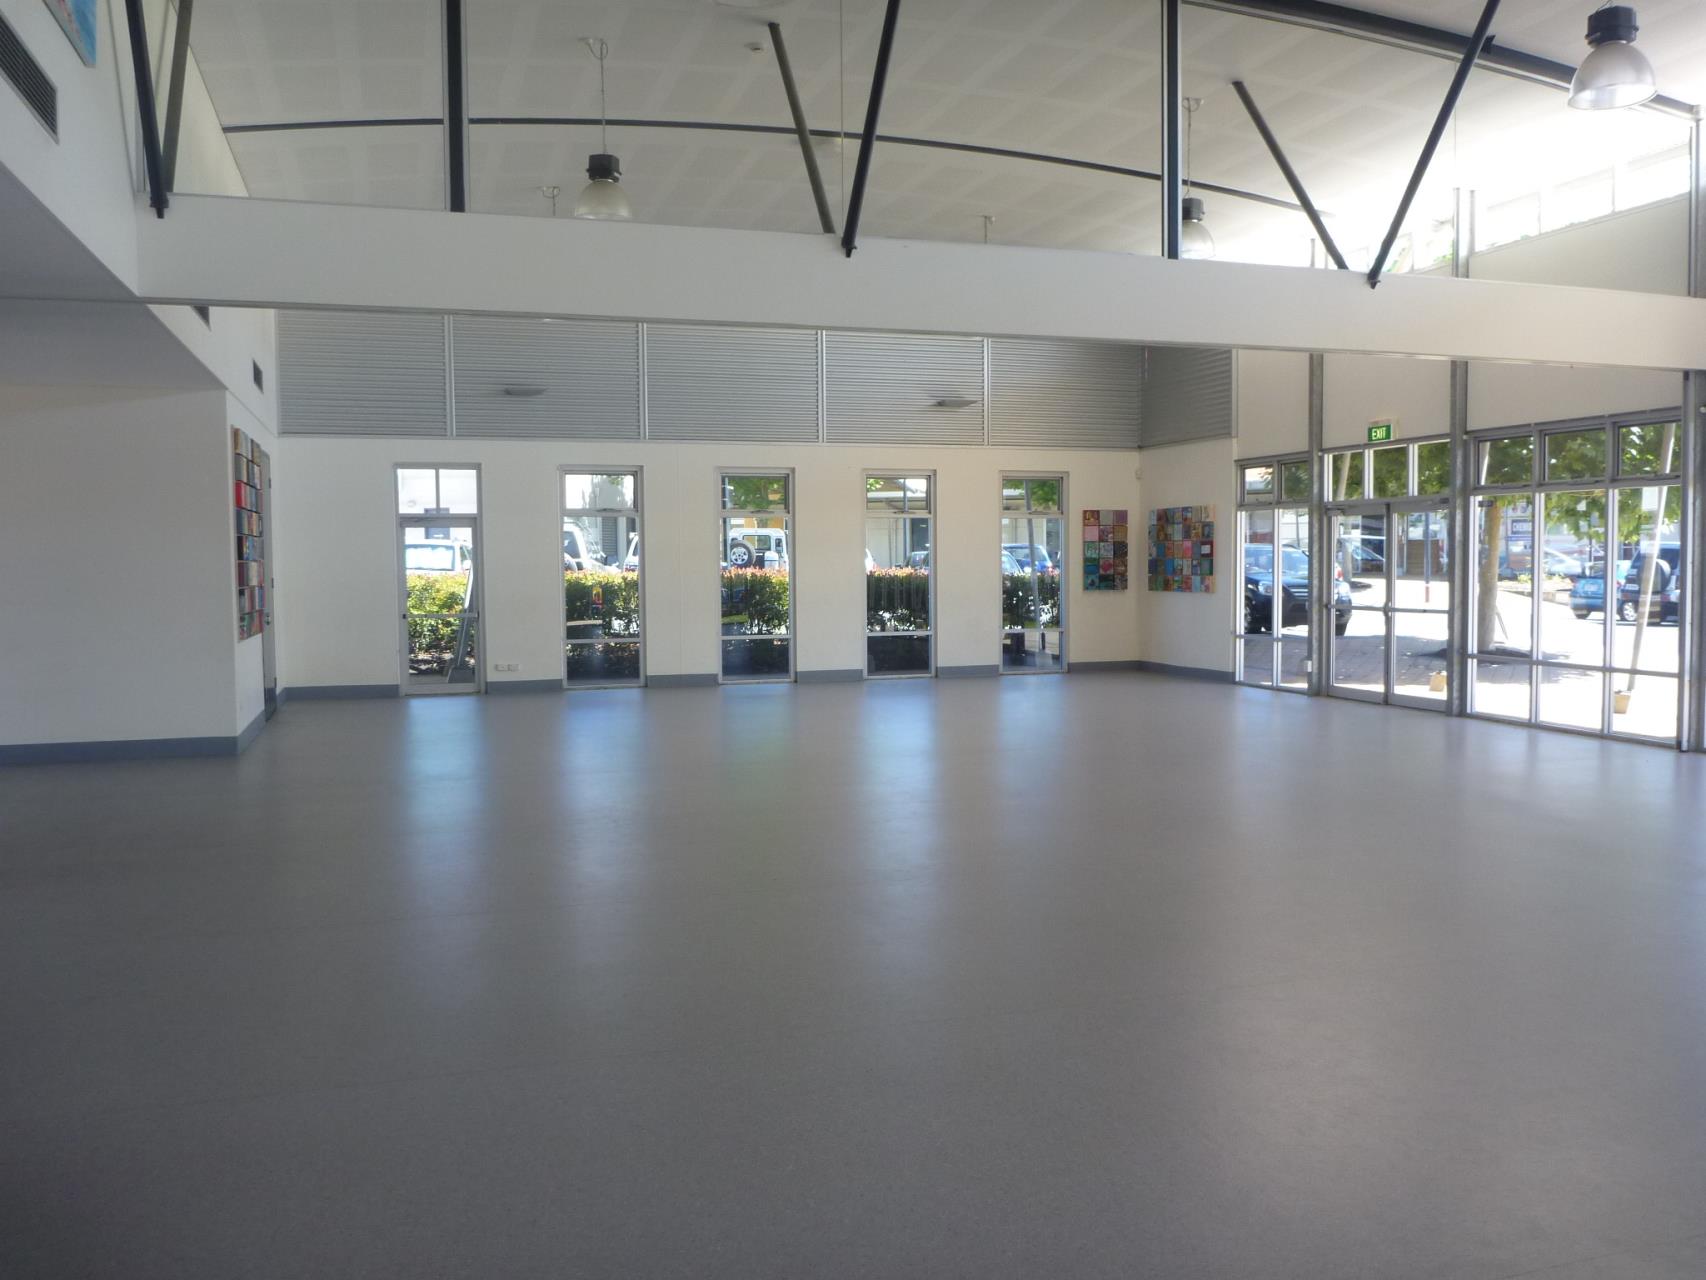 Dalyellup community centre inside